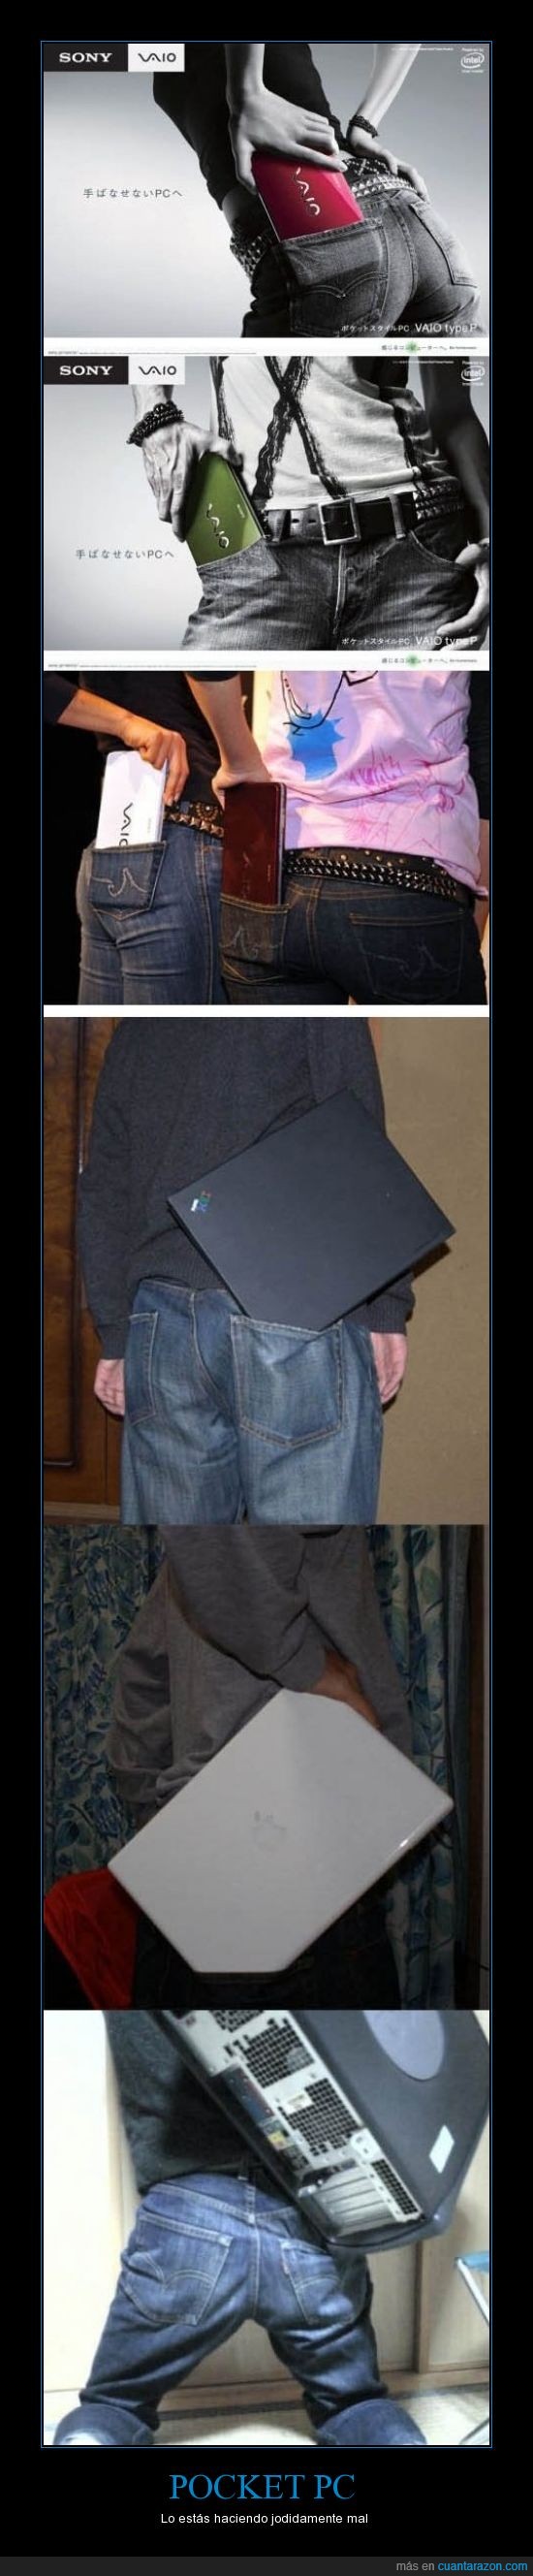 pantalones,bolsillo,ordenadores,pocket pc